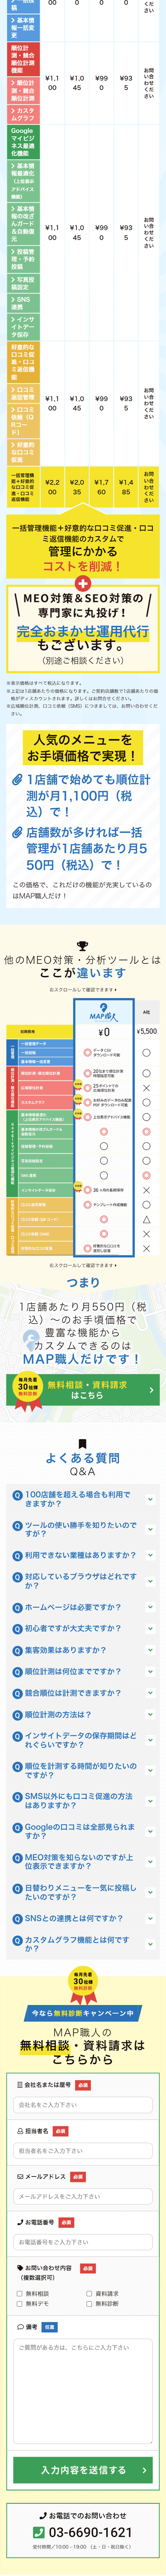 MAP職人_sp_4